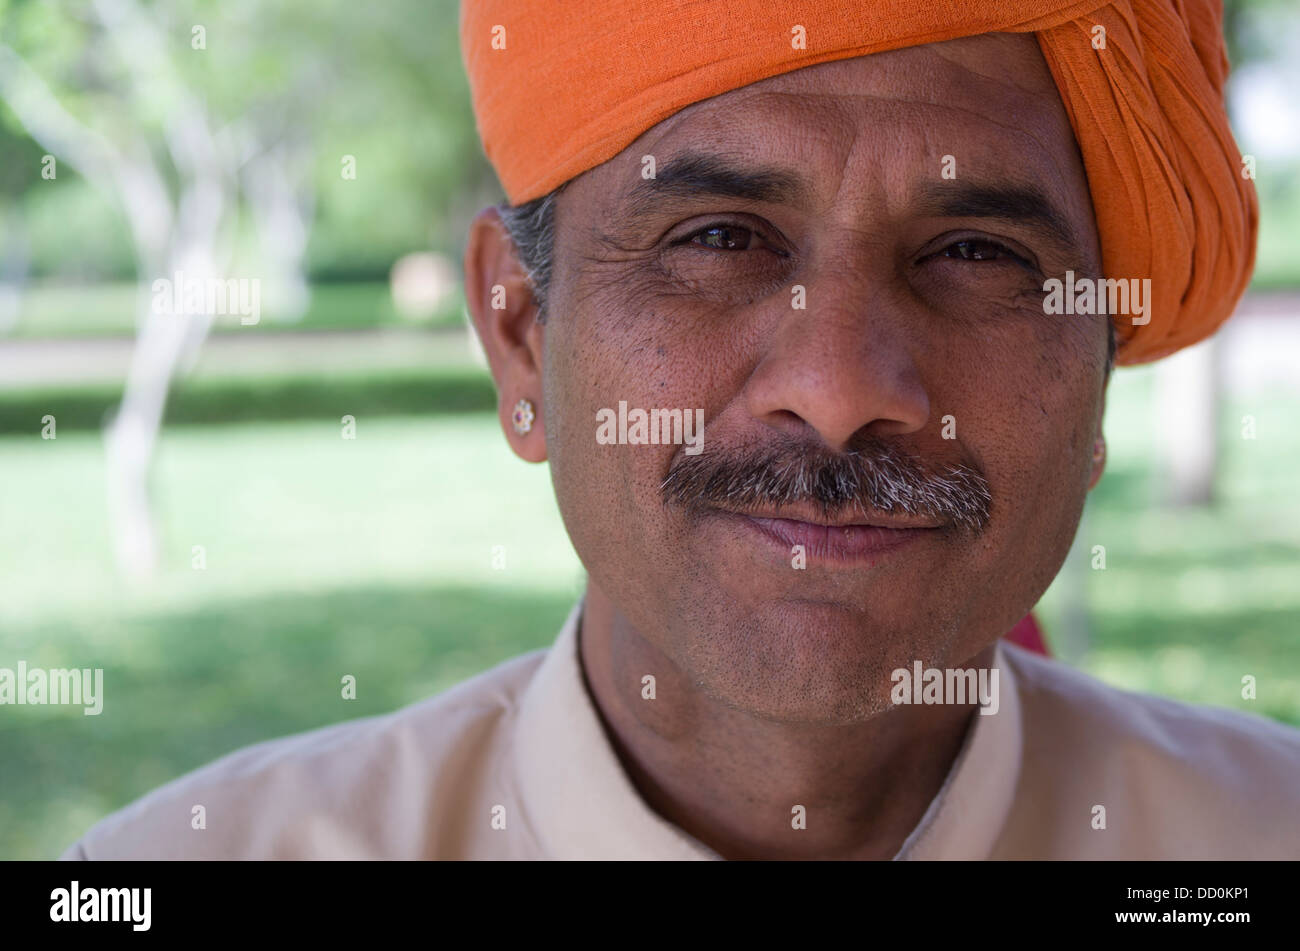 Indian man with mustache and orange turban - Jodhpur, Rajashtan, India Stock Photo